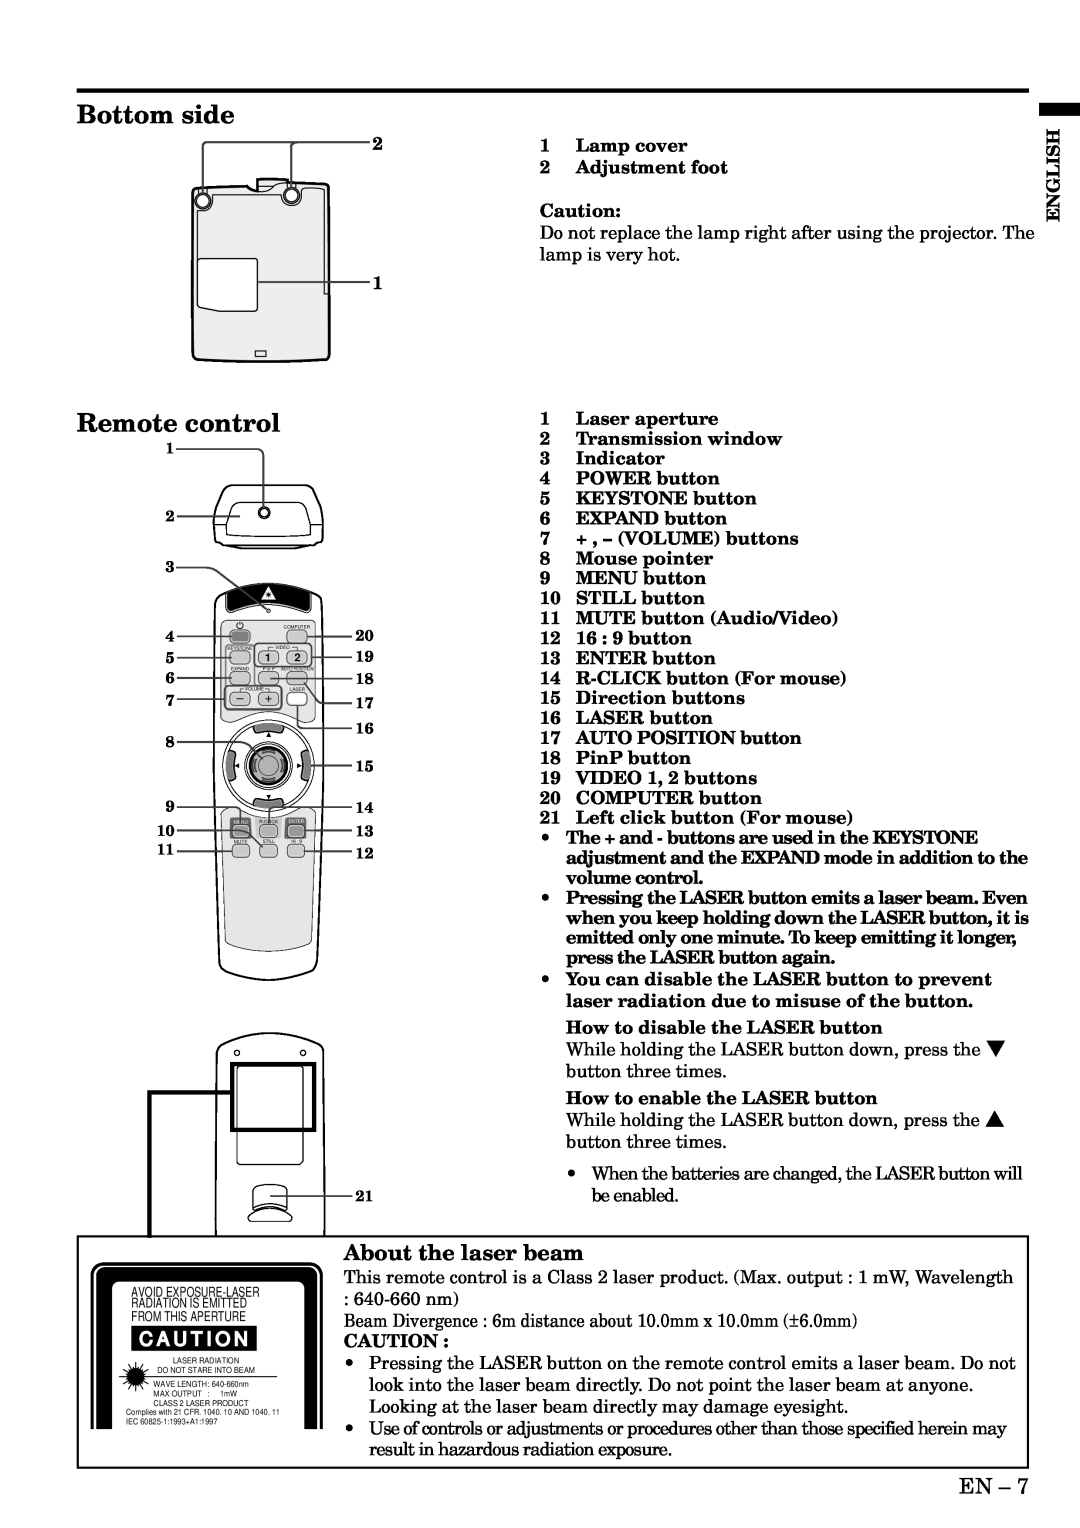 Mitsubishi Electronics XL2U user manual Bottom side, Remote control, About the laser beam, C A U T I O N 